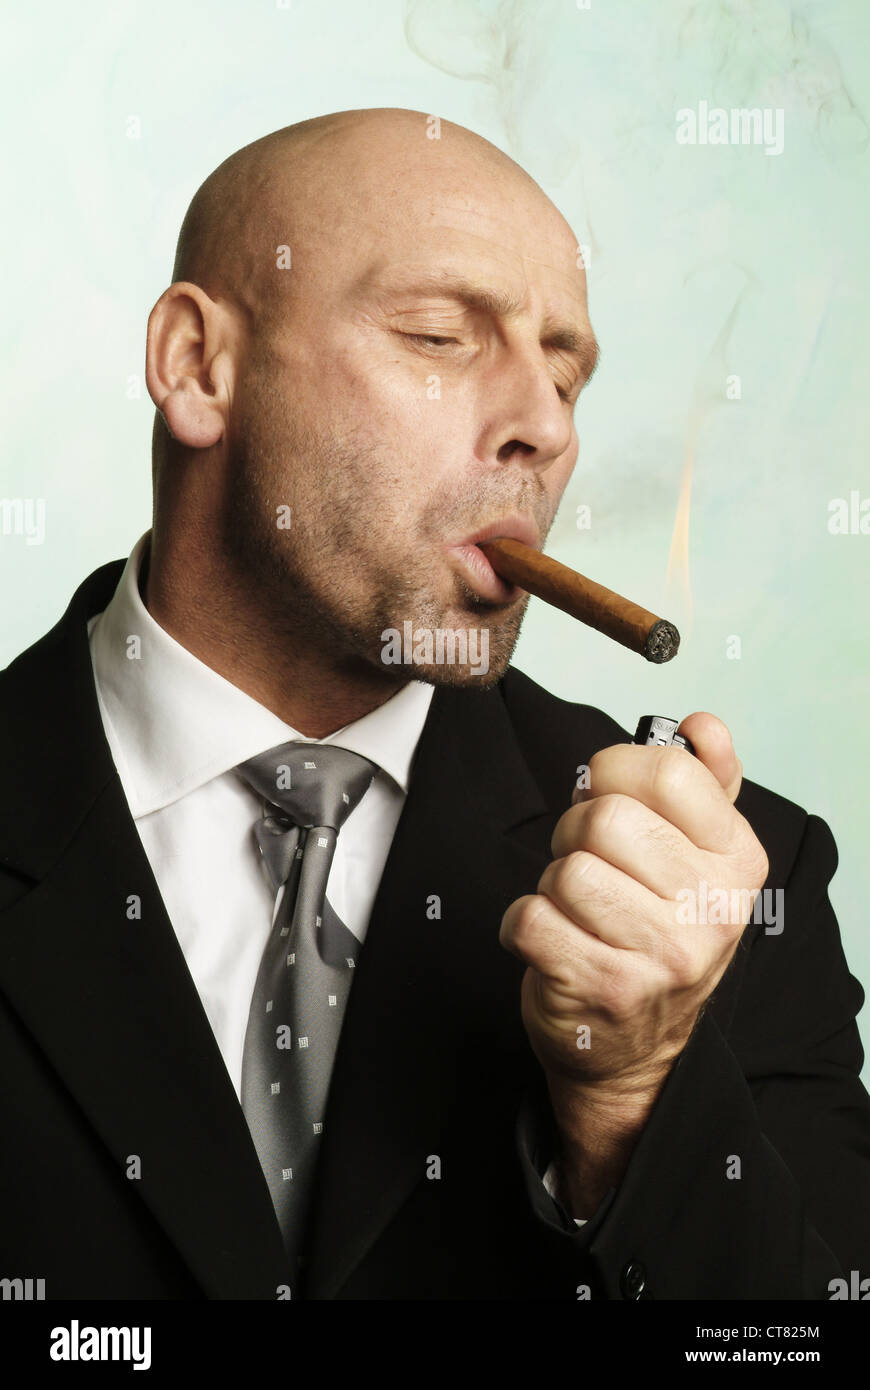 Man builts on pleasurable cigar Stock Photo